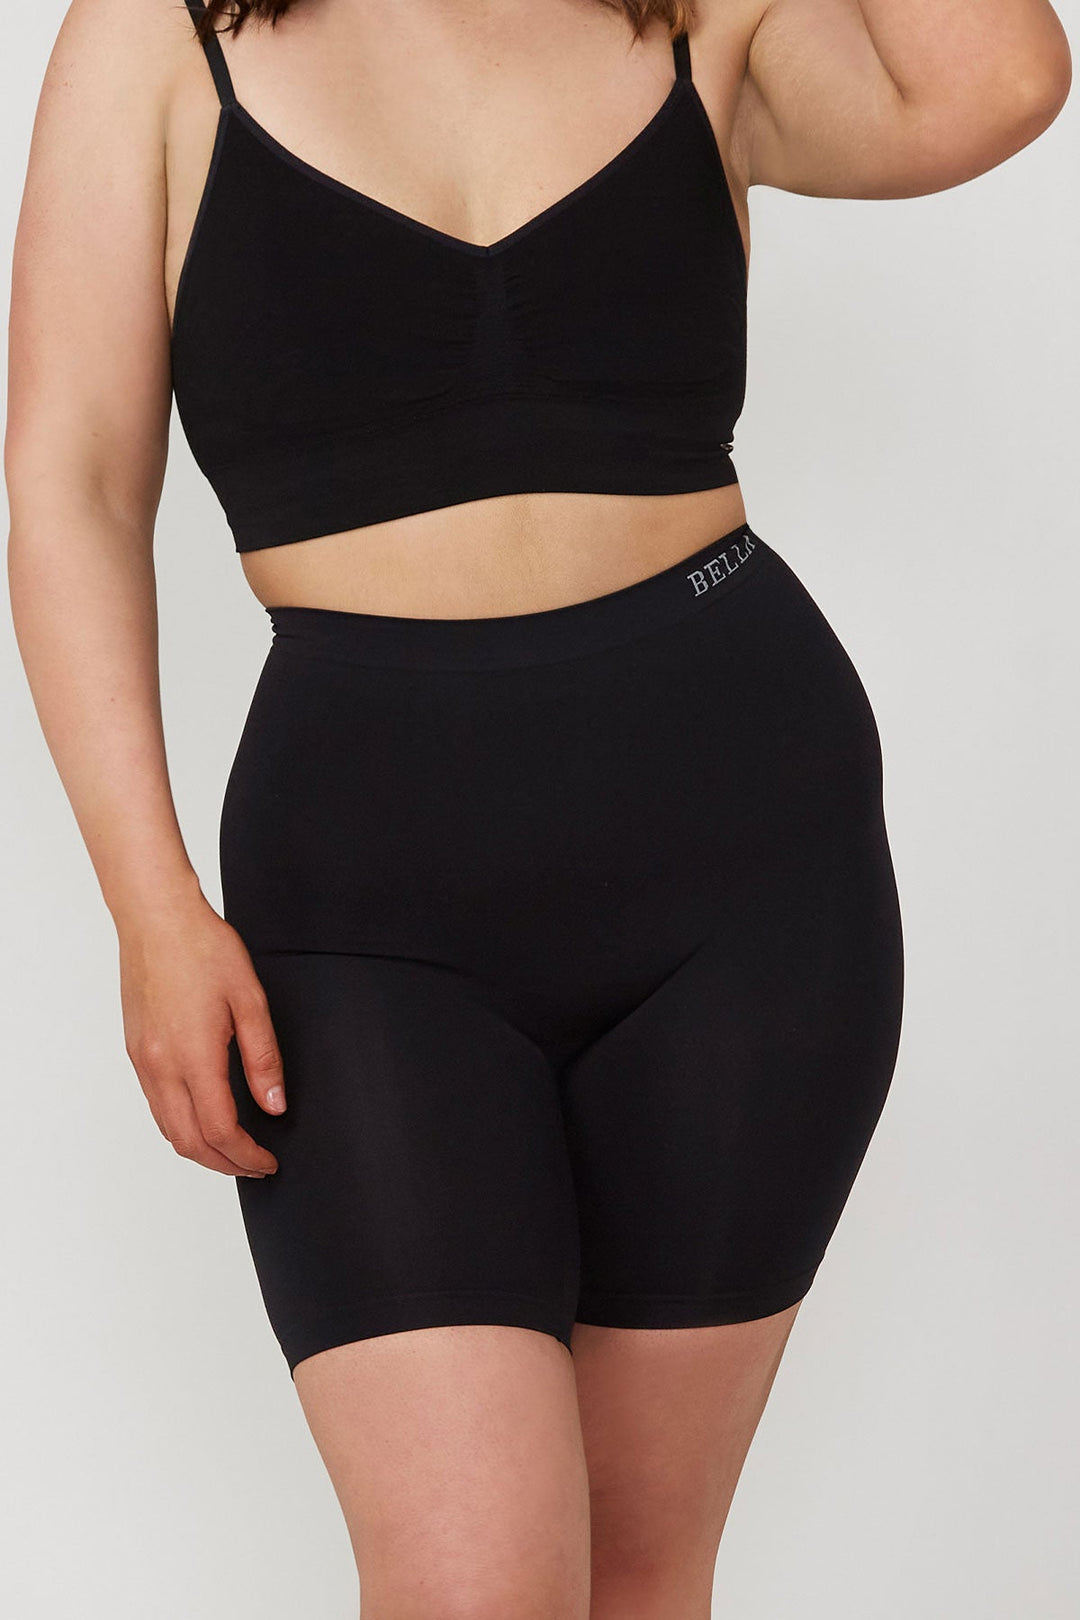 Women's anti-chafing underwear shorts | Bella Bodies UK | Coolfit Everday Anti Chafing Shorts | 2pk | Black | Front